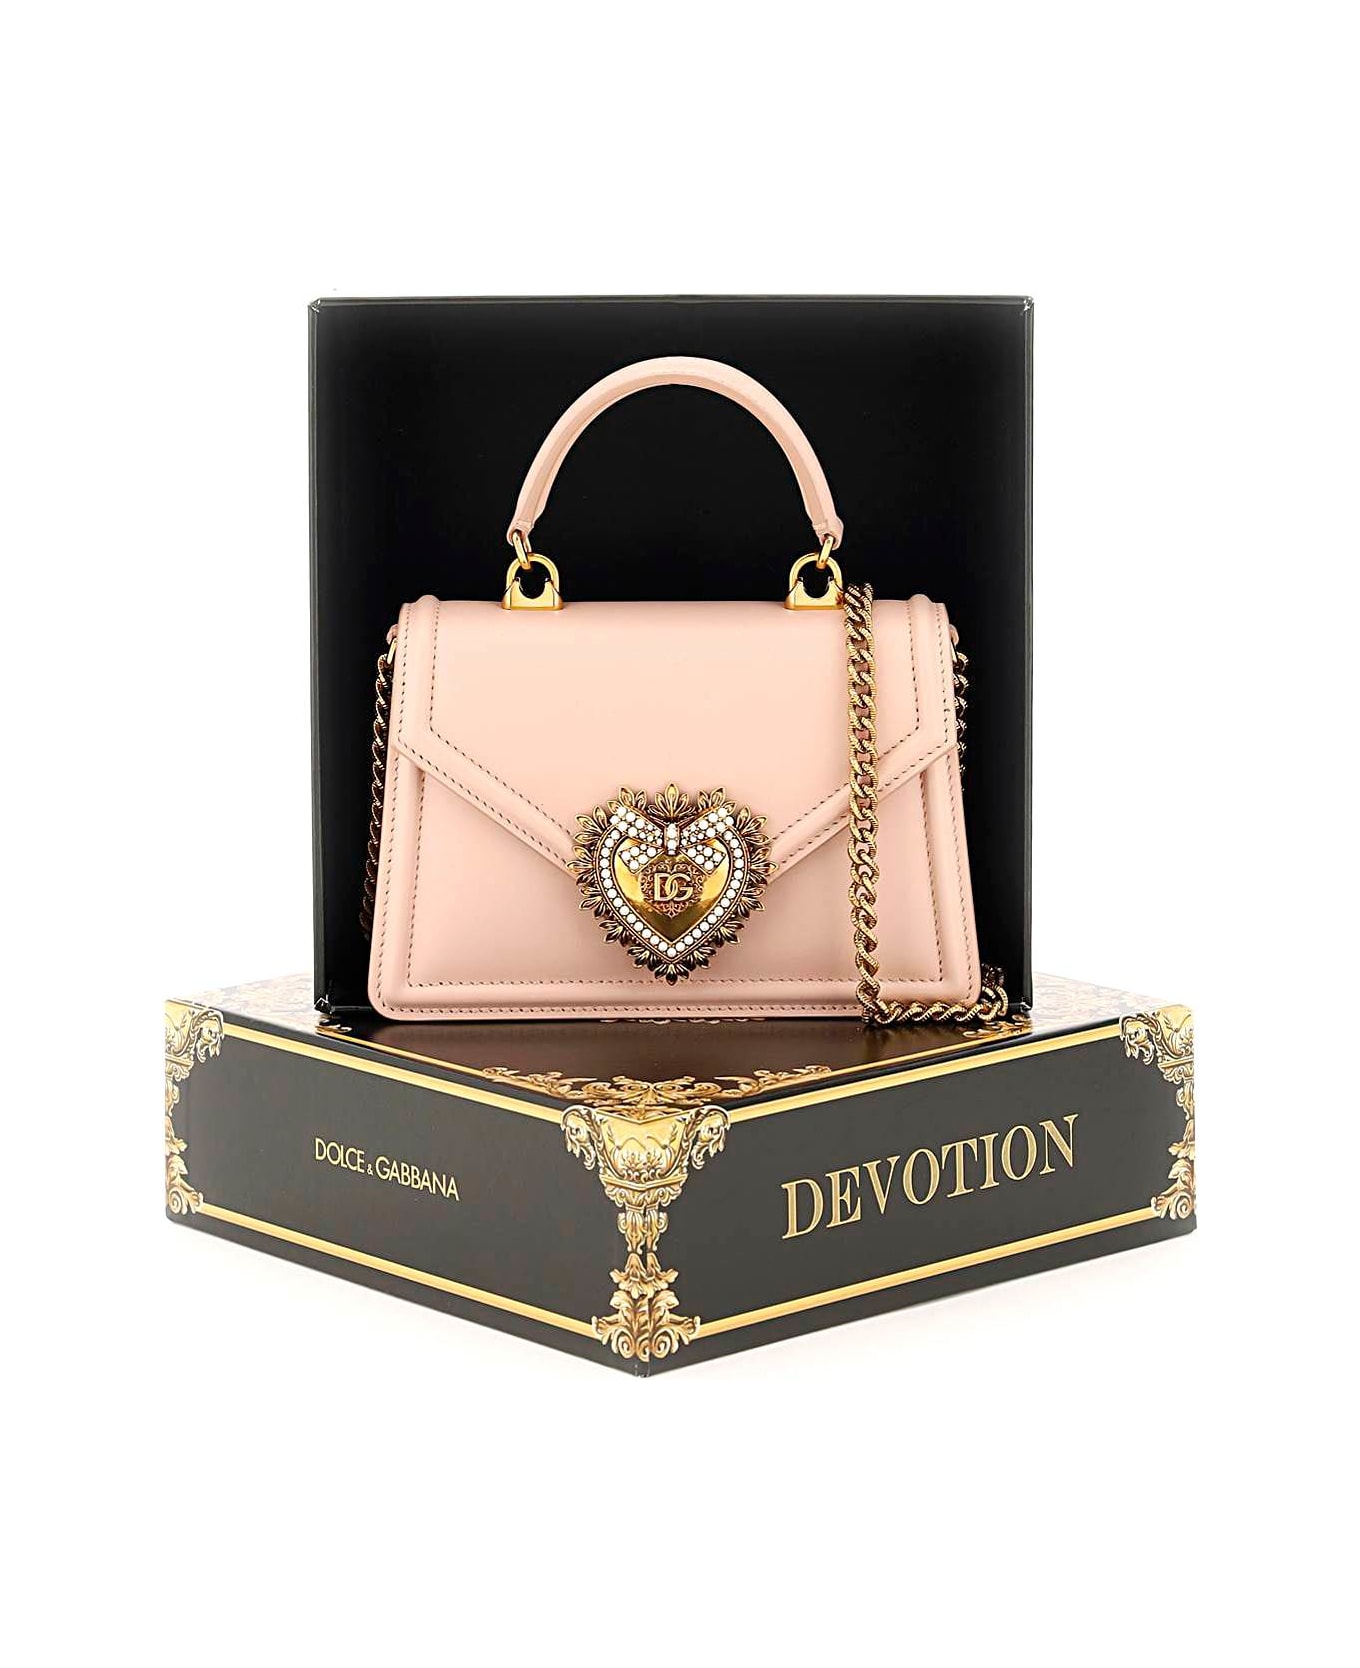 Dolce & Gabbana Devotion Bag - POWDER